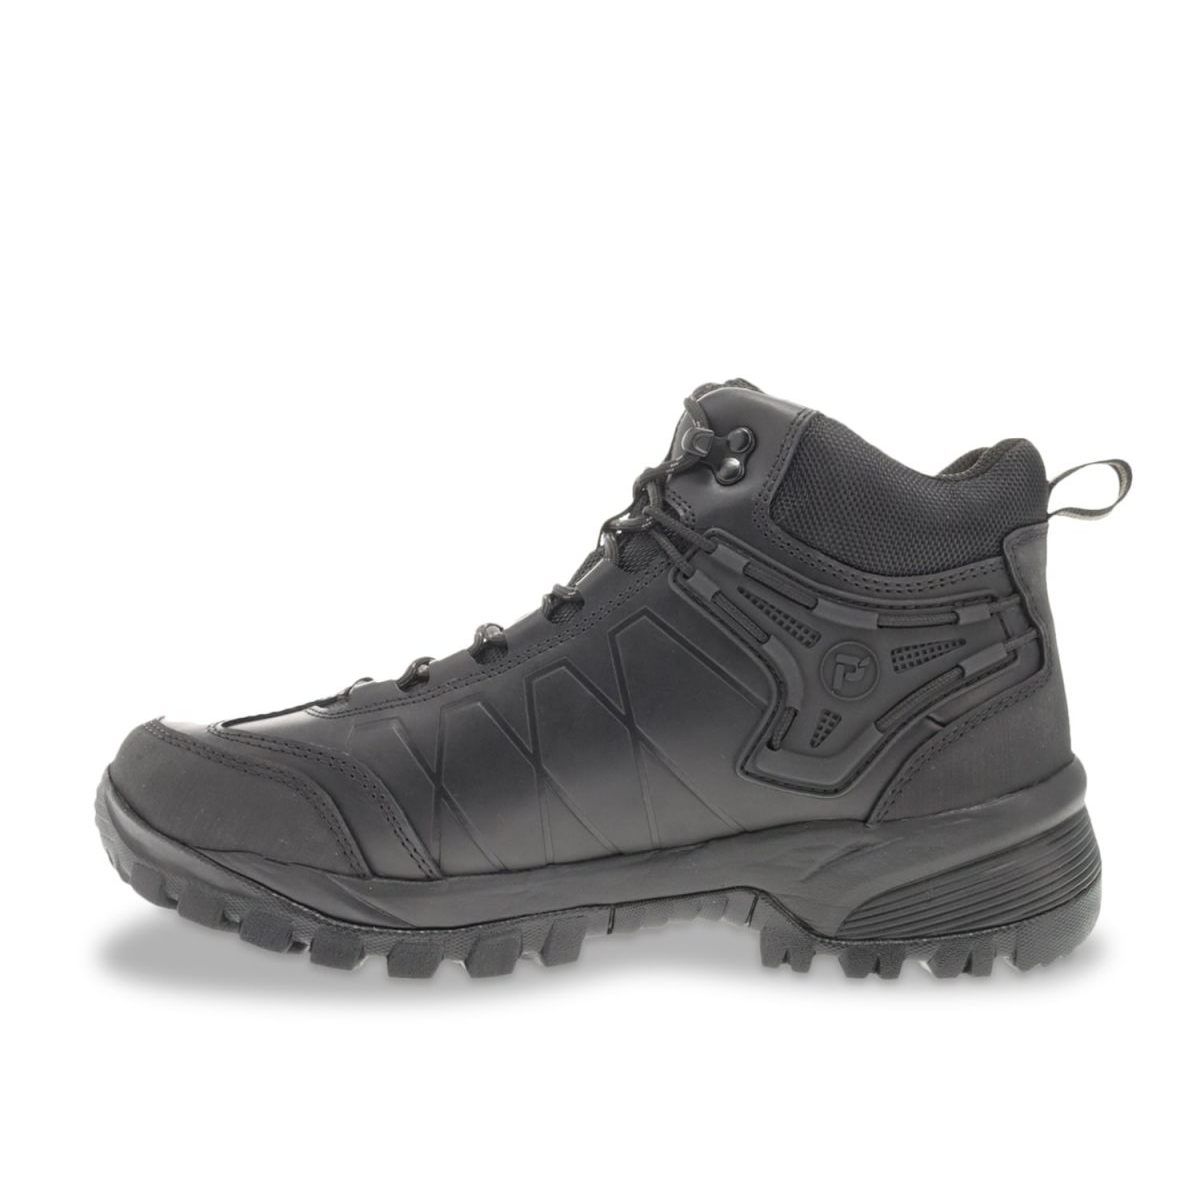 Propet Men's Ridge Walker Force Hiking Boots Black - MBA052LBLK BLACK - BLACK, 12 XX-Wide